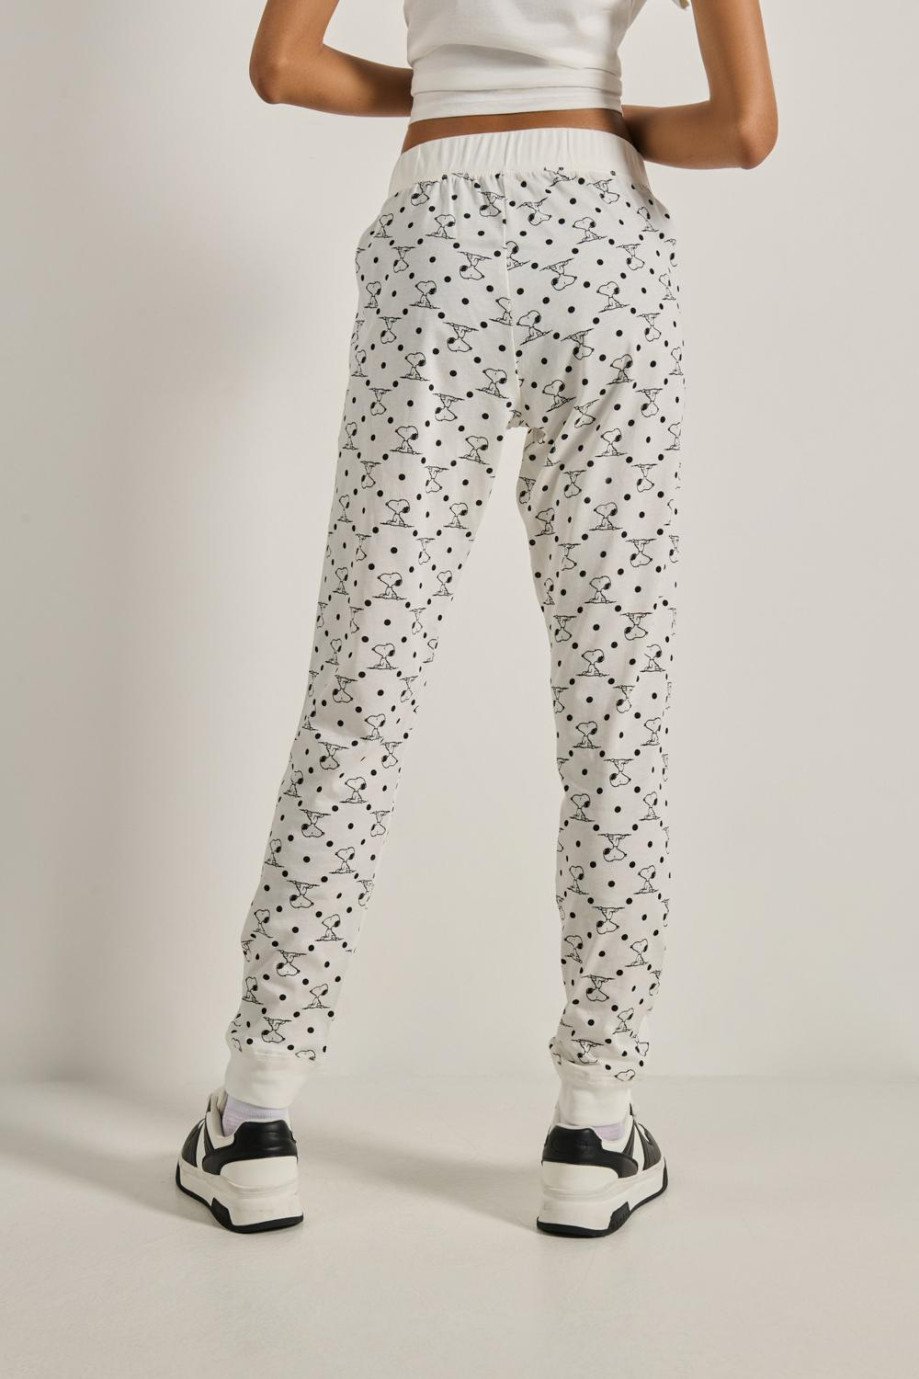 Pantalón jogger para mujer con estampado continuo de Snoopy Complementa tu outfit con esta prenda.